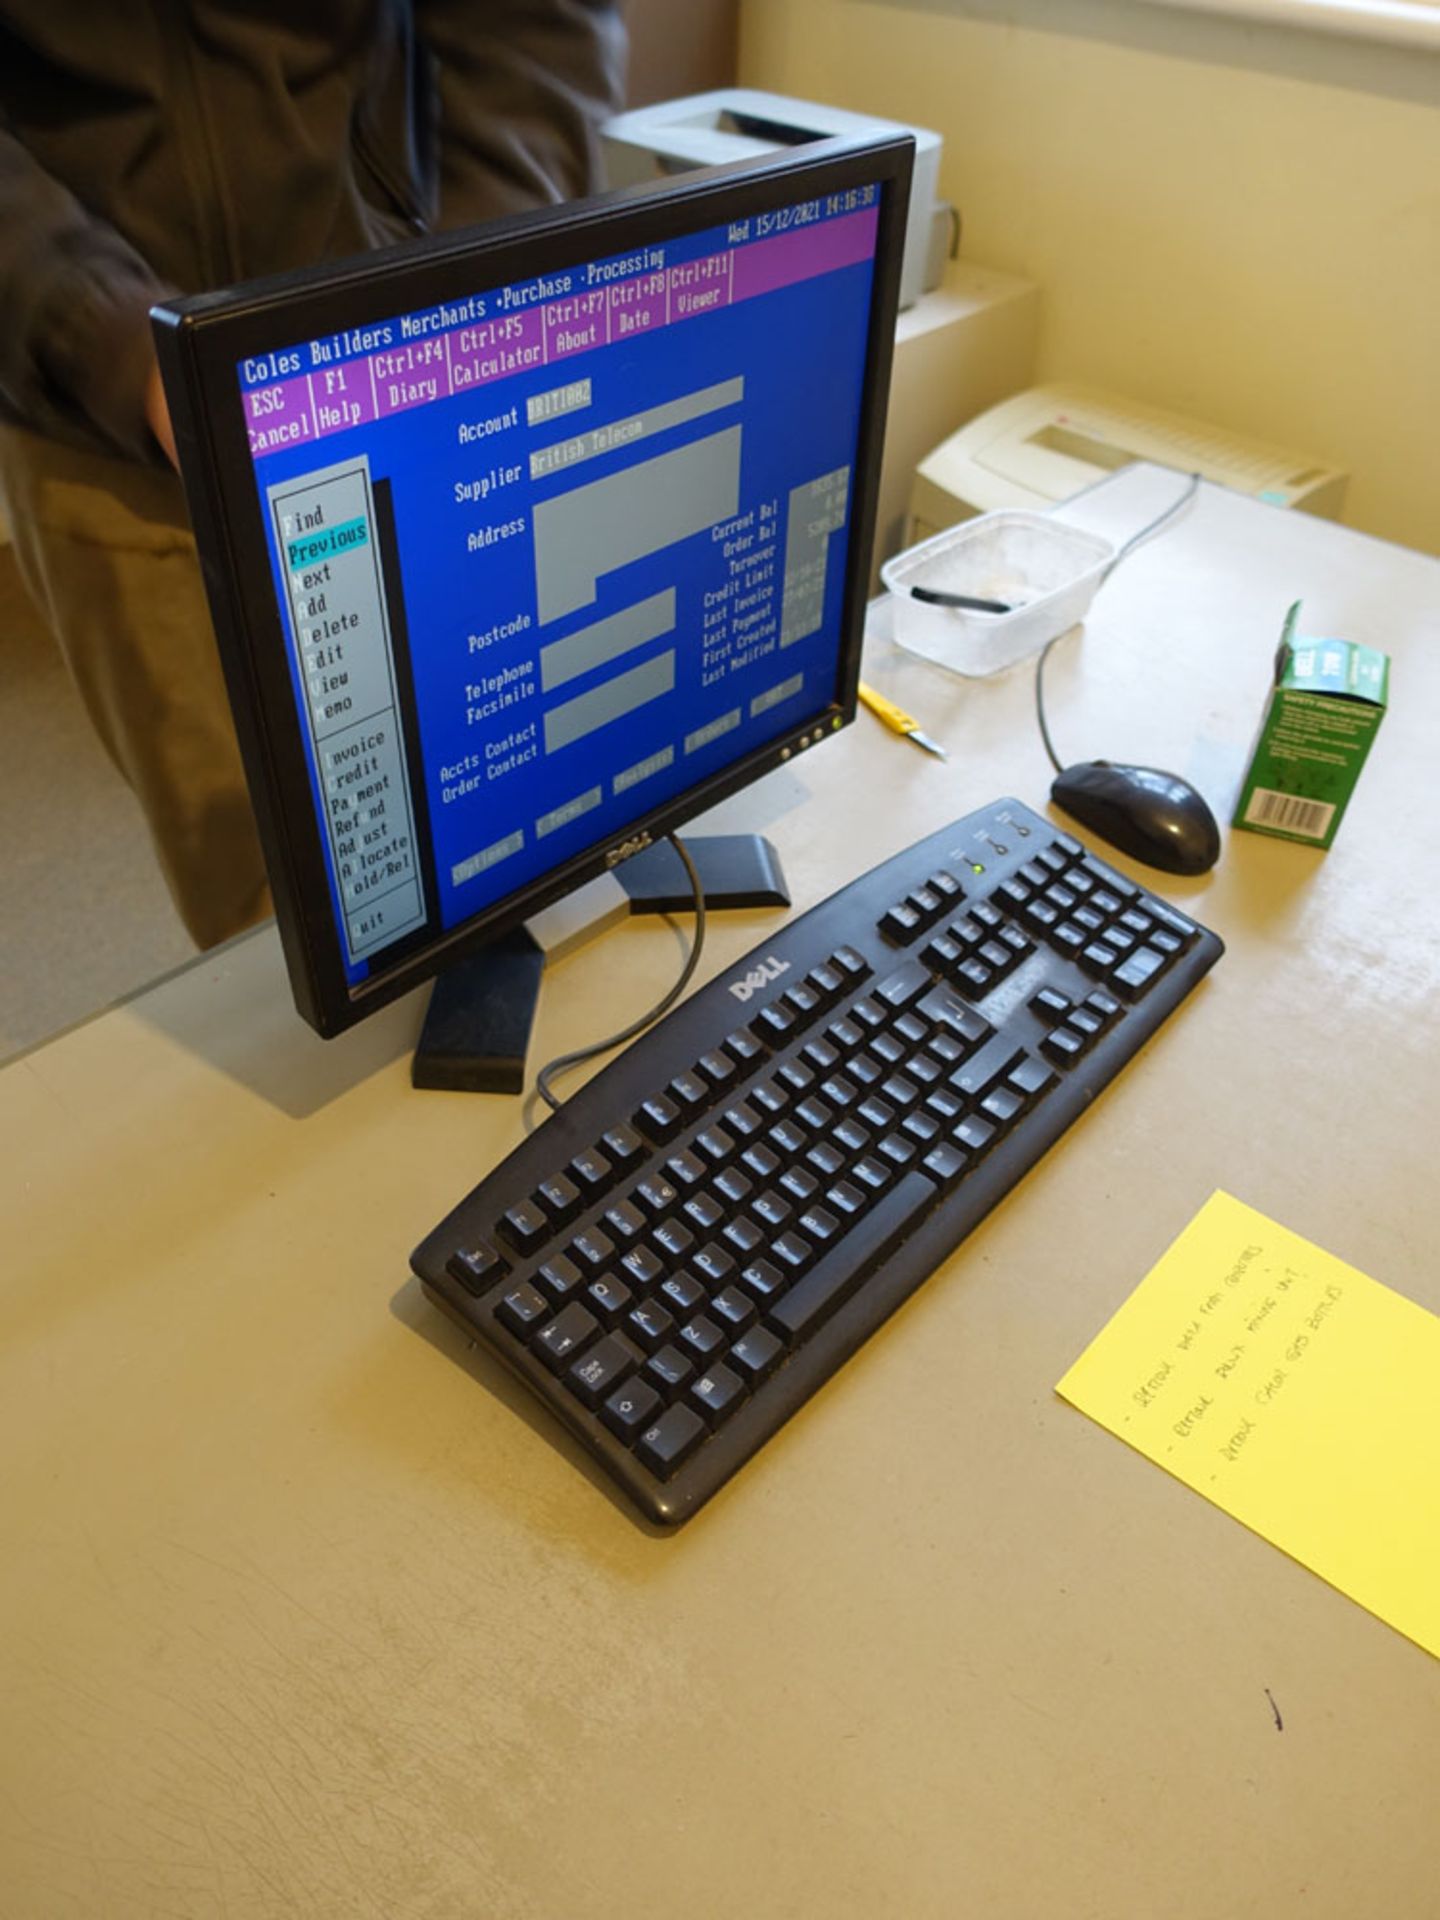 Two desktop computers, Samsung Xpress printer, Citizen Swift 240 Plus printer and a Samsung printer